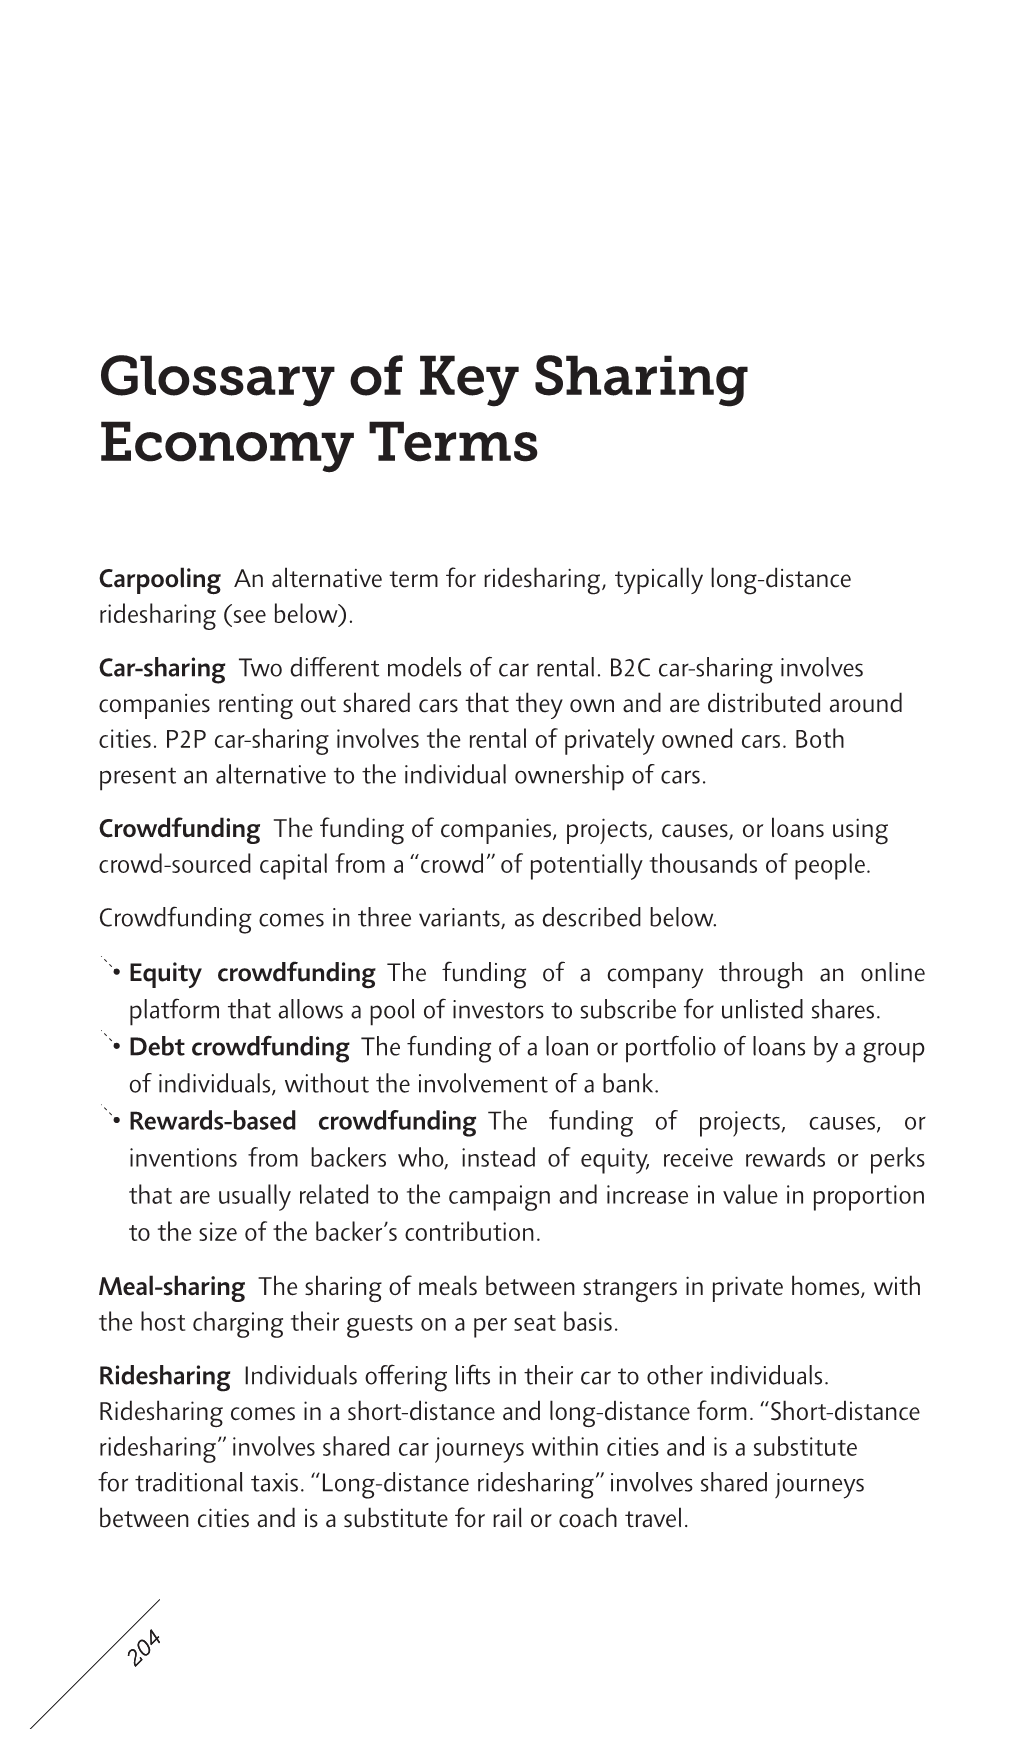 Glossary of Key Sharing Economy Terms